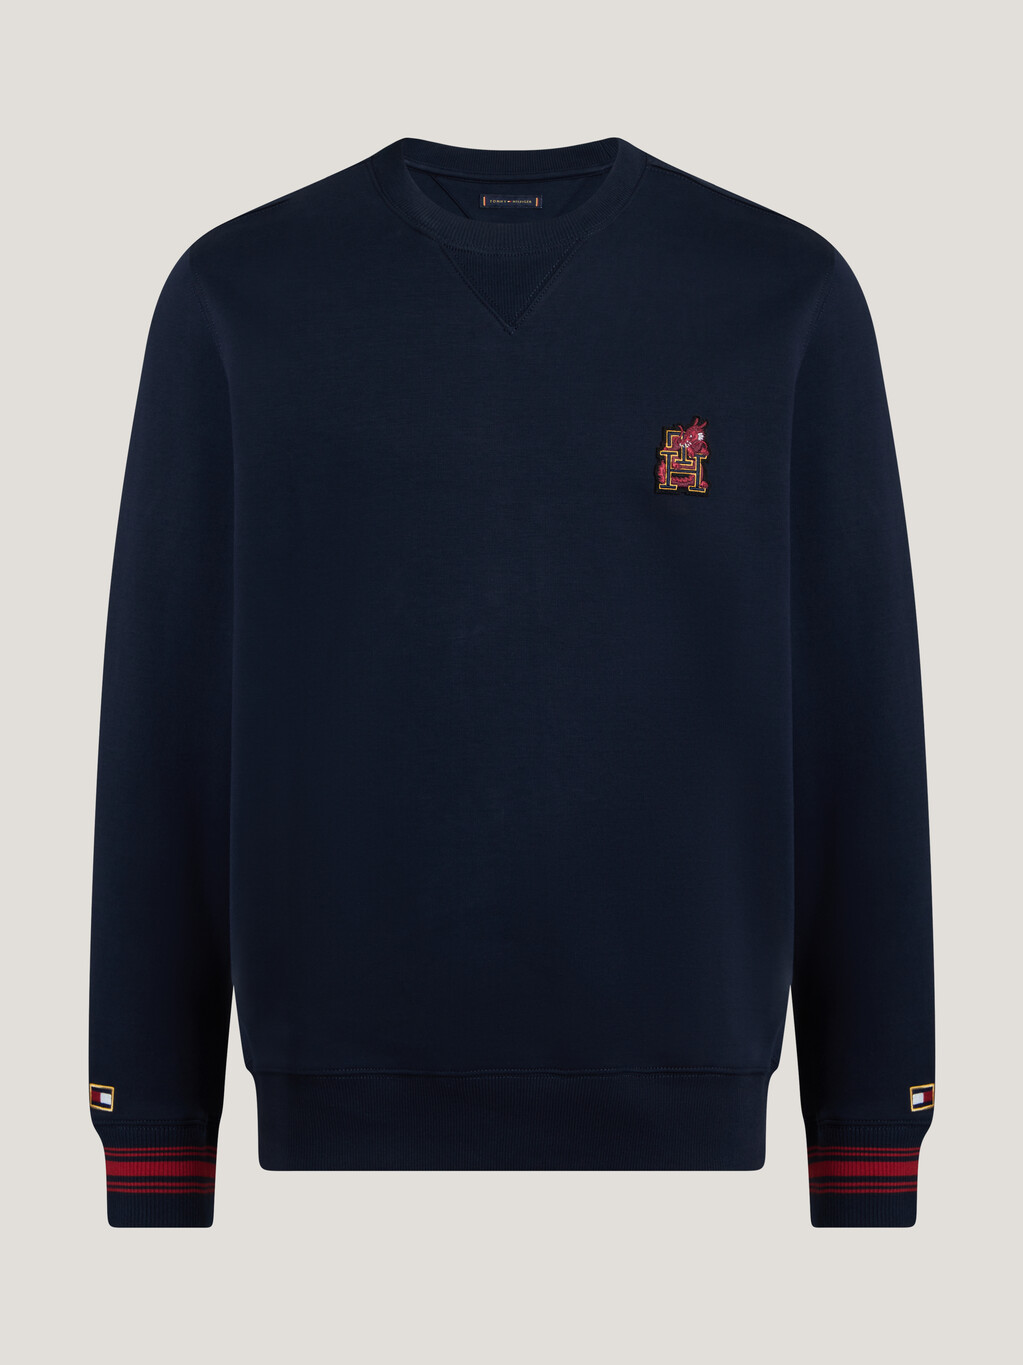 CNY Monogram Sweatshirt, Desert Sky, hi-res